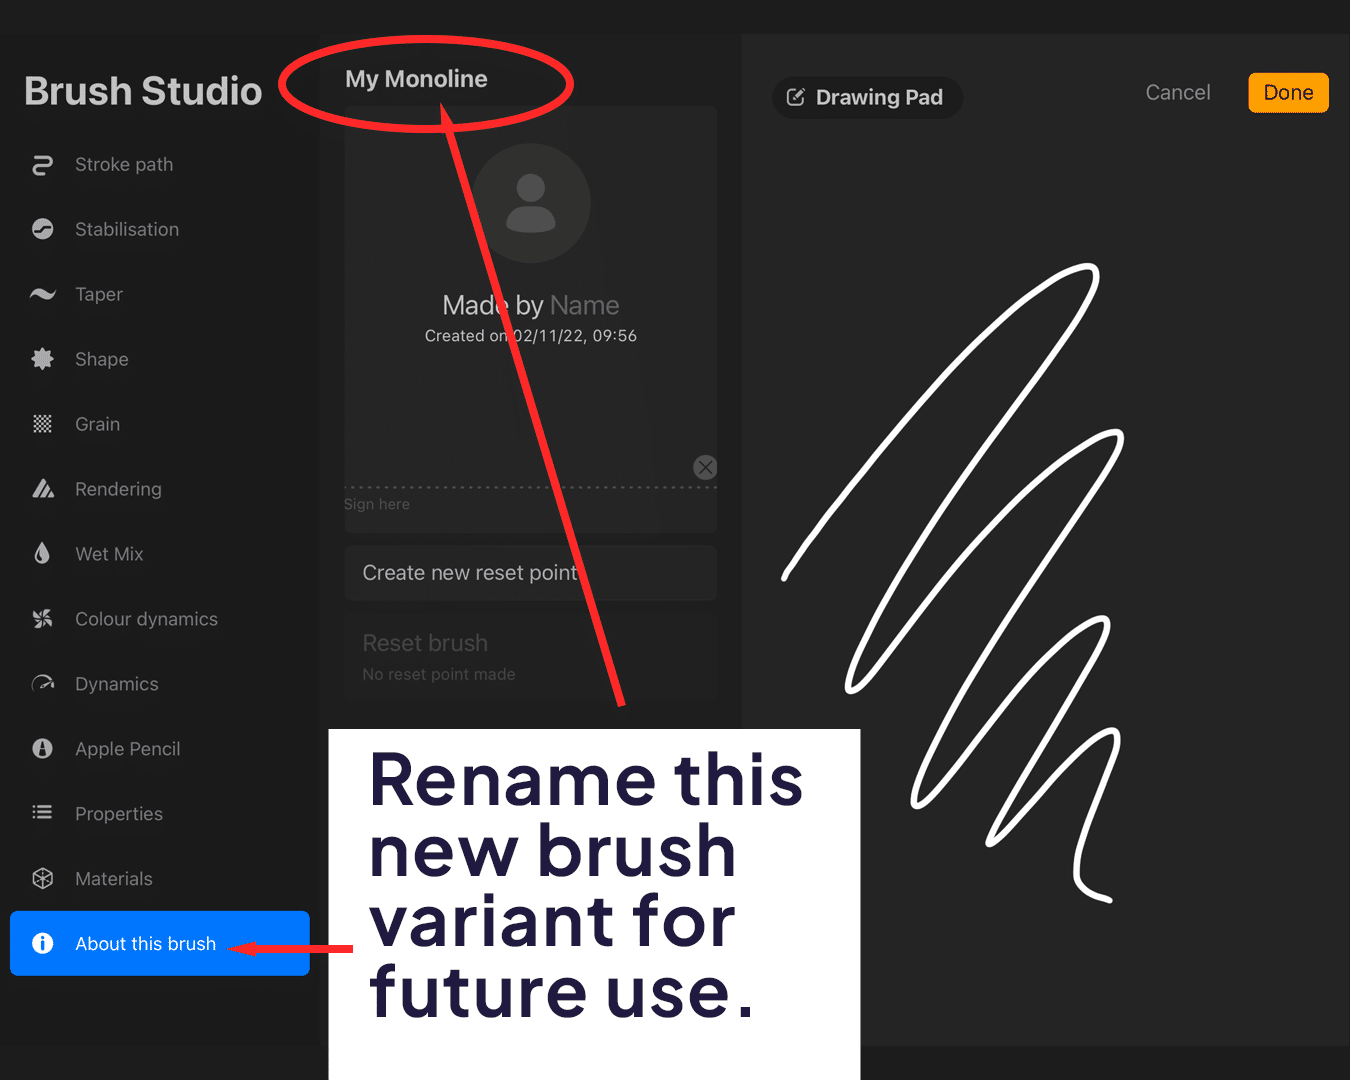 Renaming the new brush variant